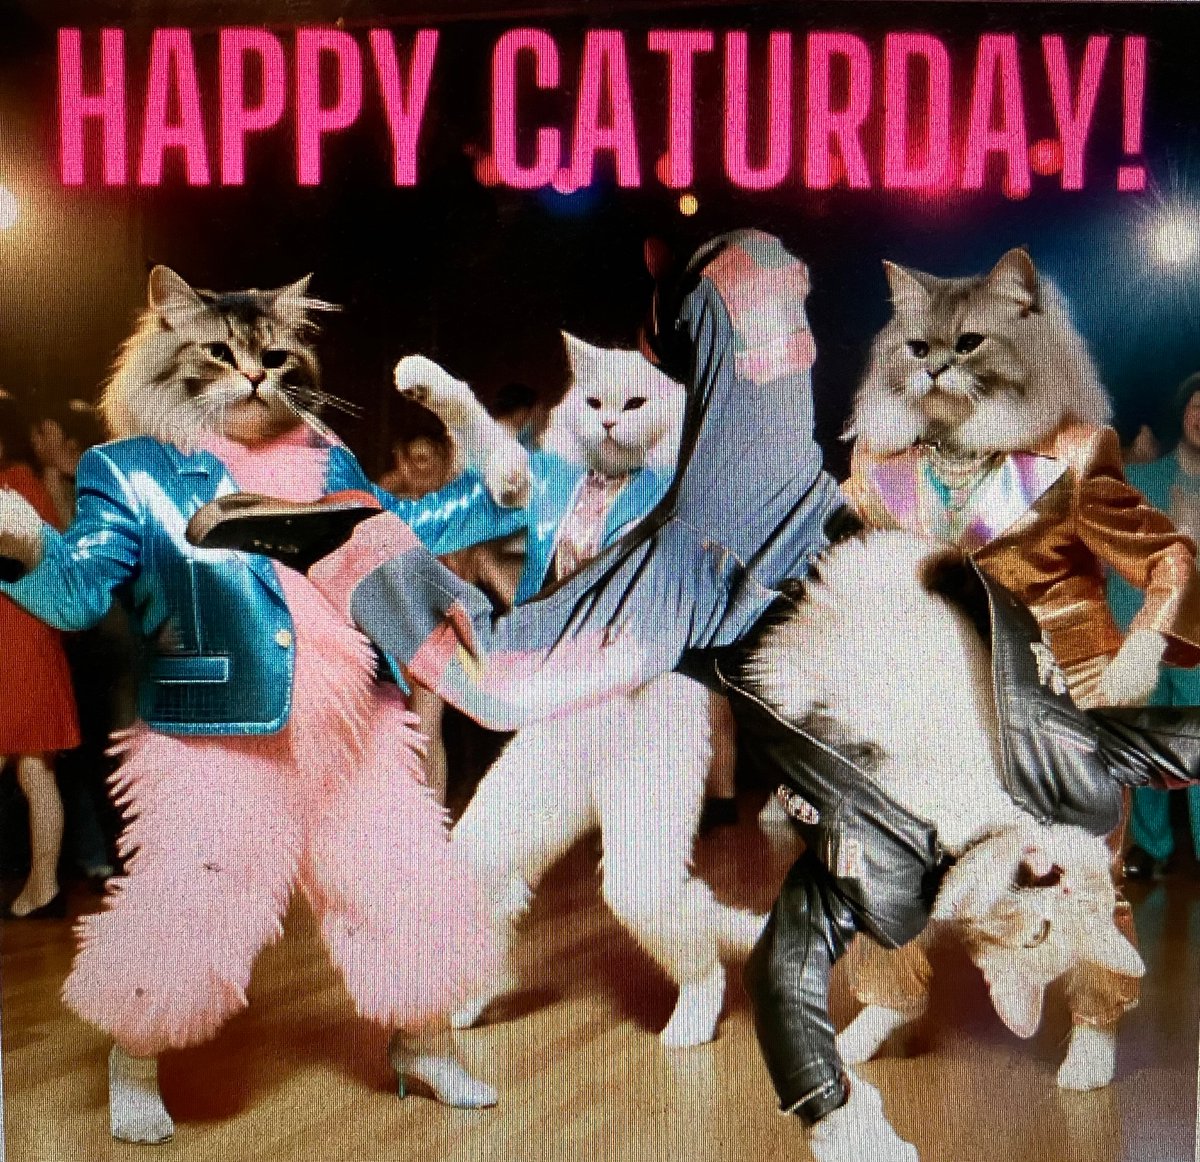 Happy Caturday darlings! #Caturday #HappyCaturday 
@MaryBroderson @PoemTrees @RobinOuzman @NicoMirallegro @taratara2 @Mirallegro @monkeyinabox @wwwPoet @LISUSuzy068 @SistahPoet @SeanMaxwell @PoetryLifeTimes @AmparoArrospide 😸 xx